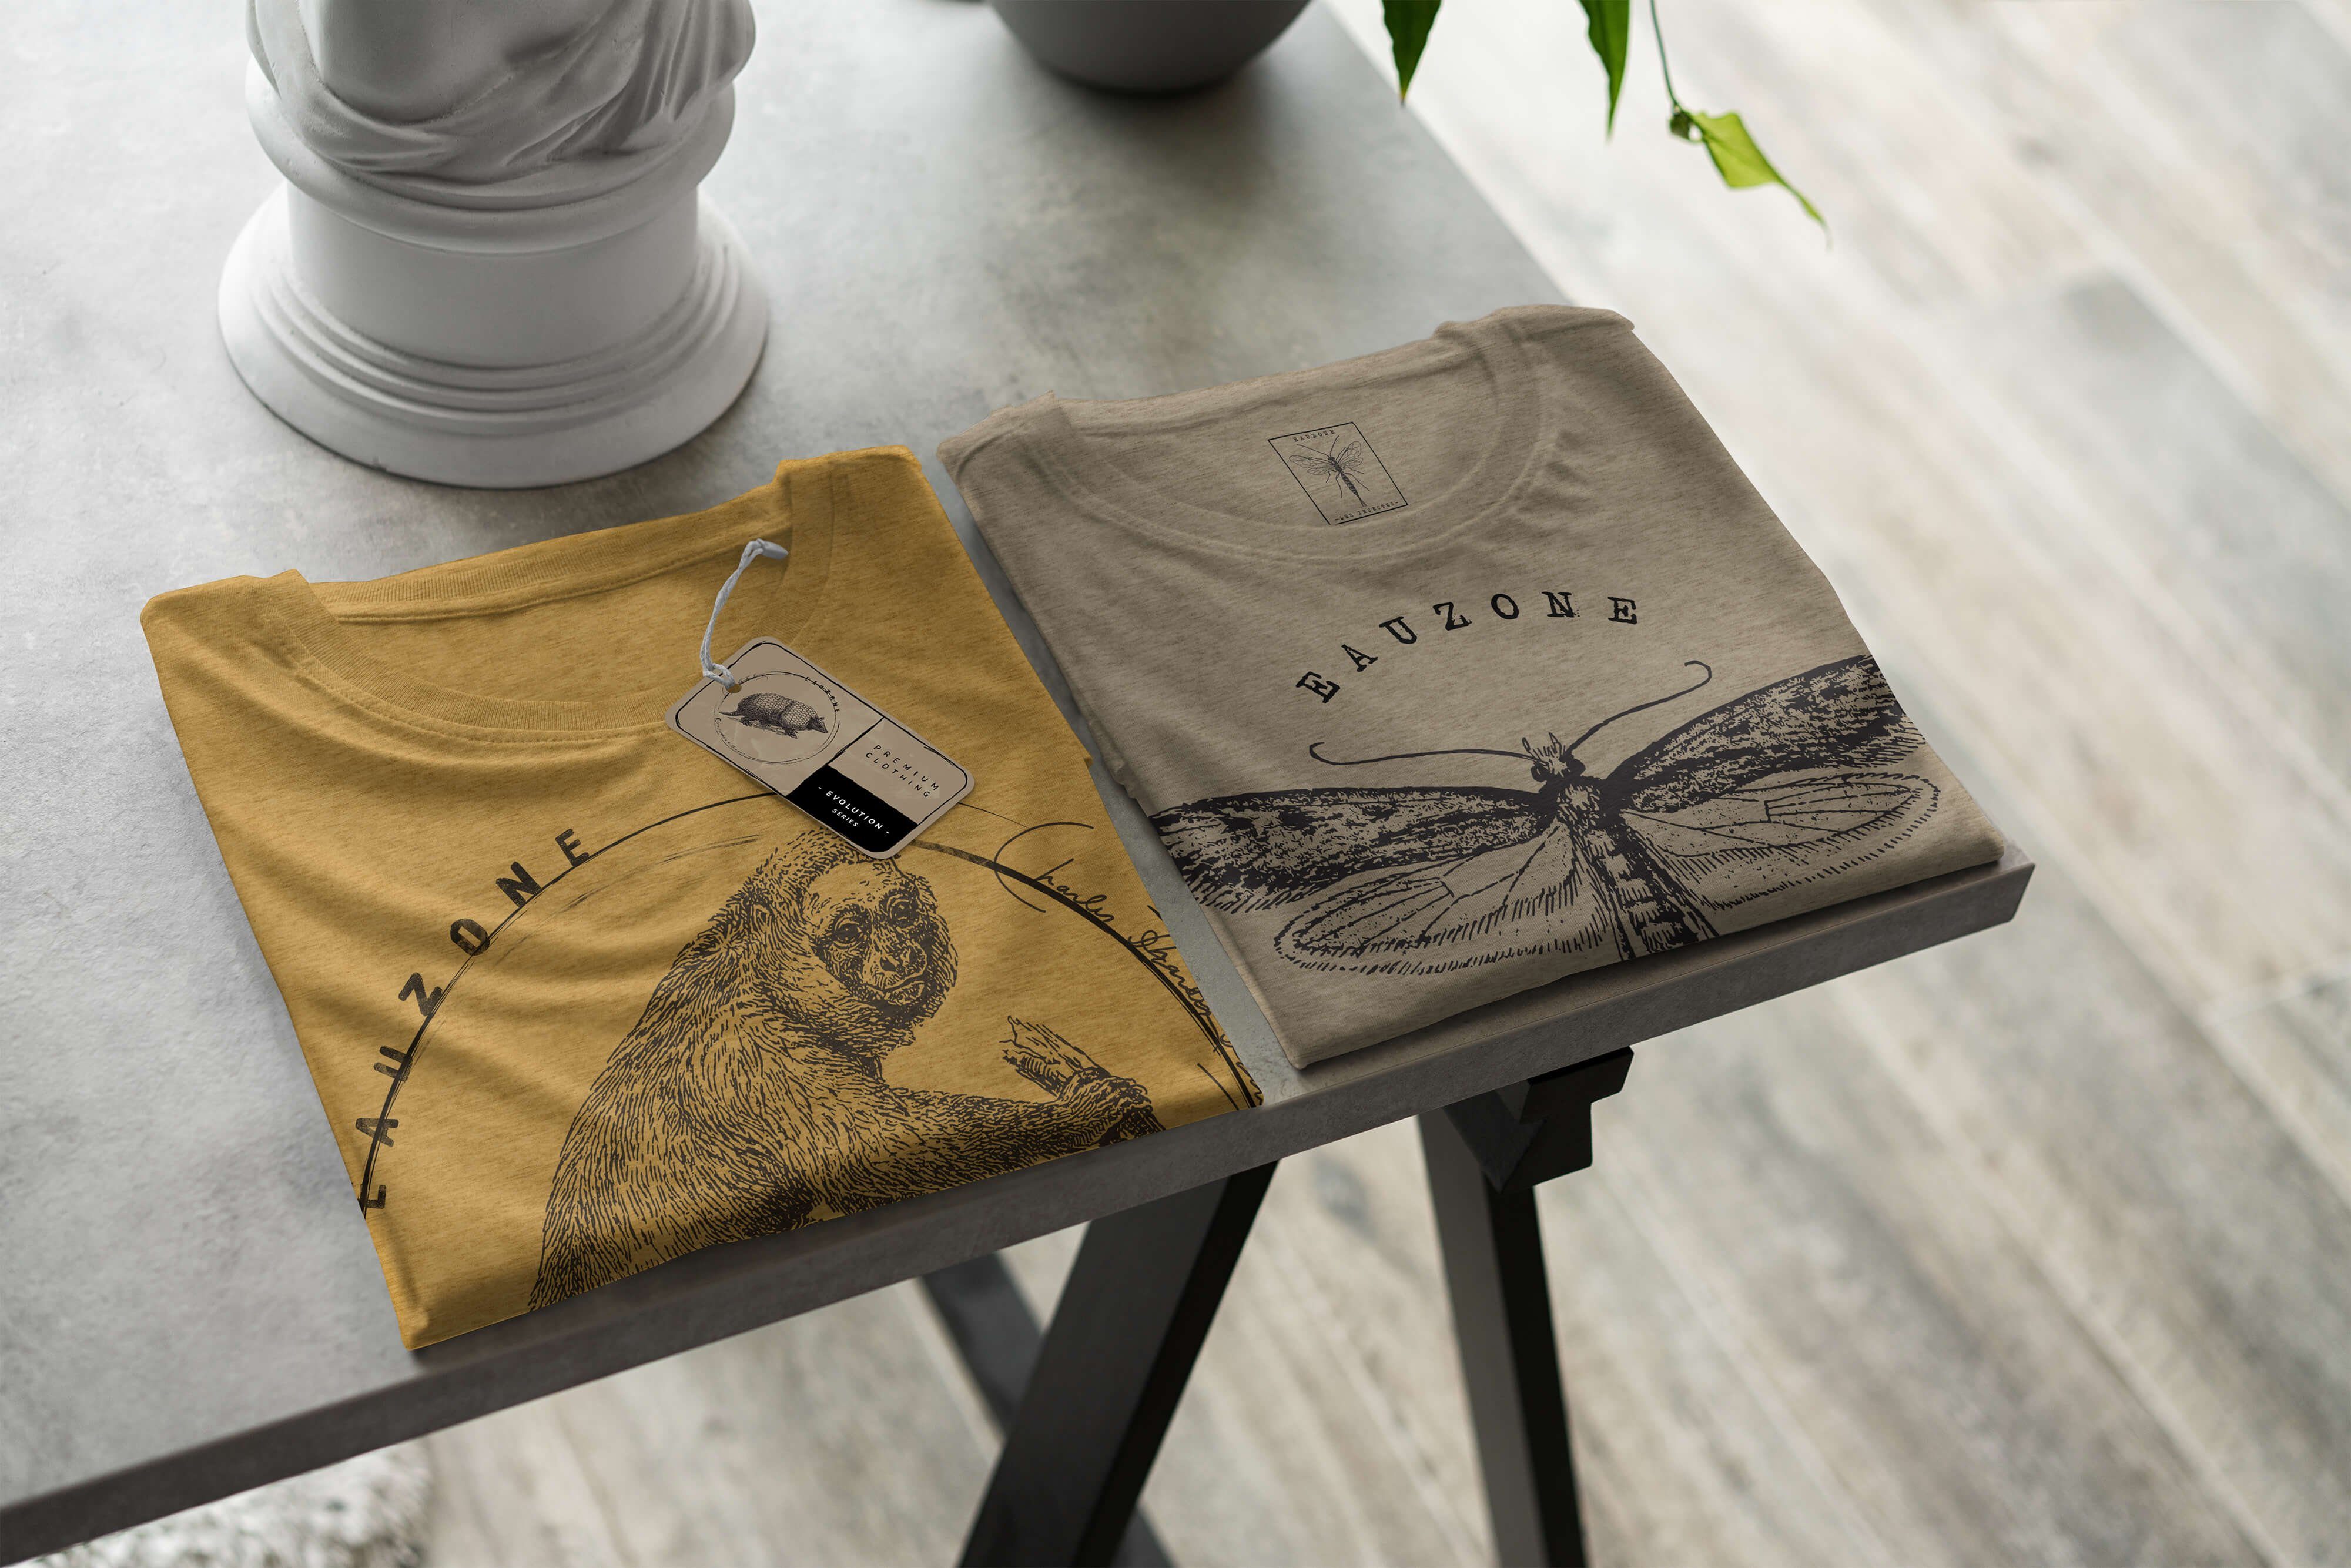 Sinus Art T-Shirt Antique Evolution Kahlkopf-Saki Gold Herren T-Shirt